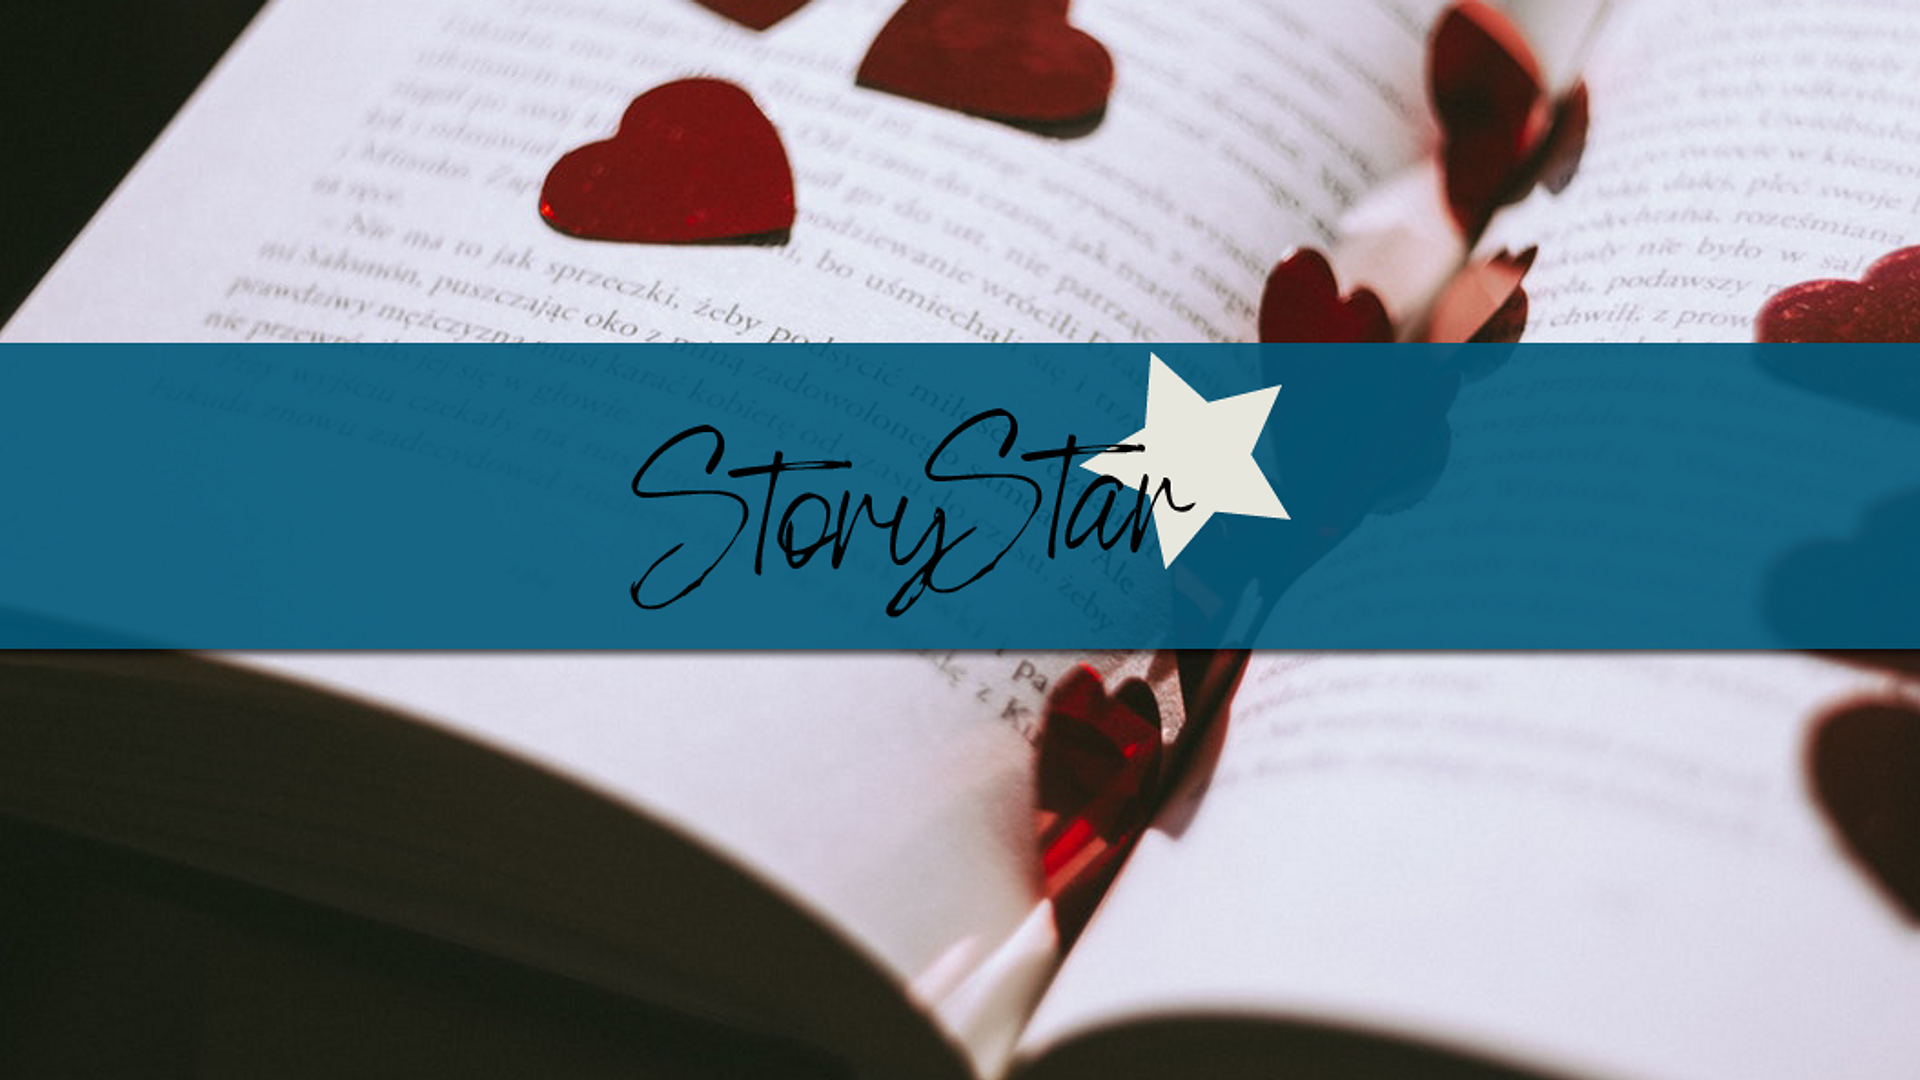 Project StoryStar